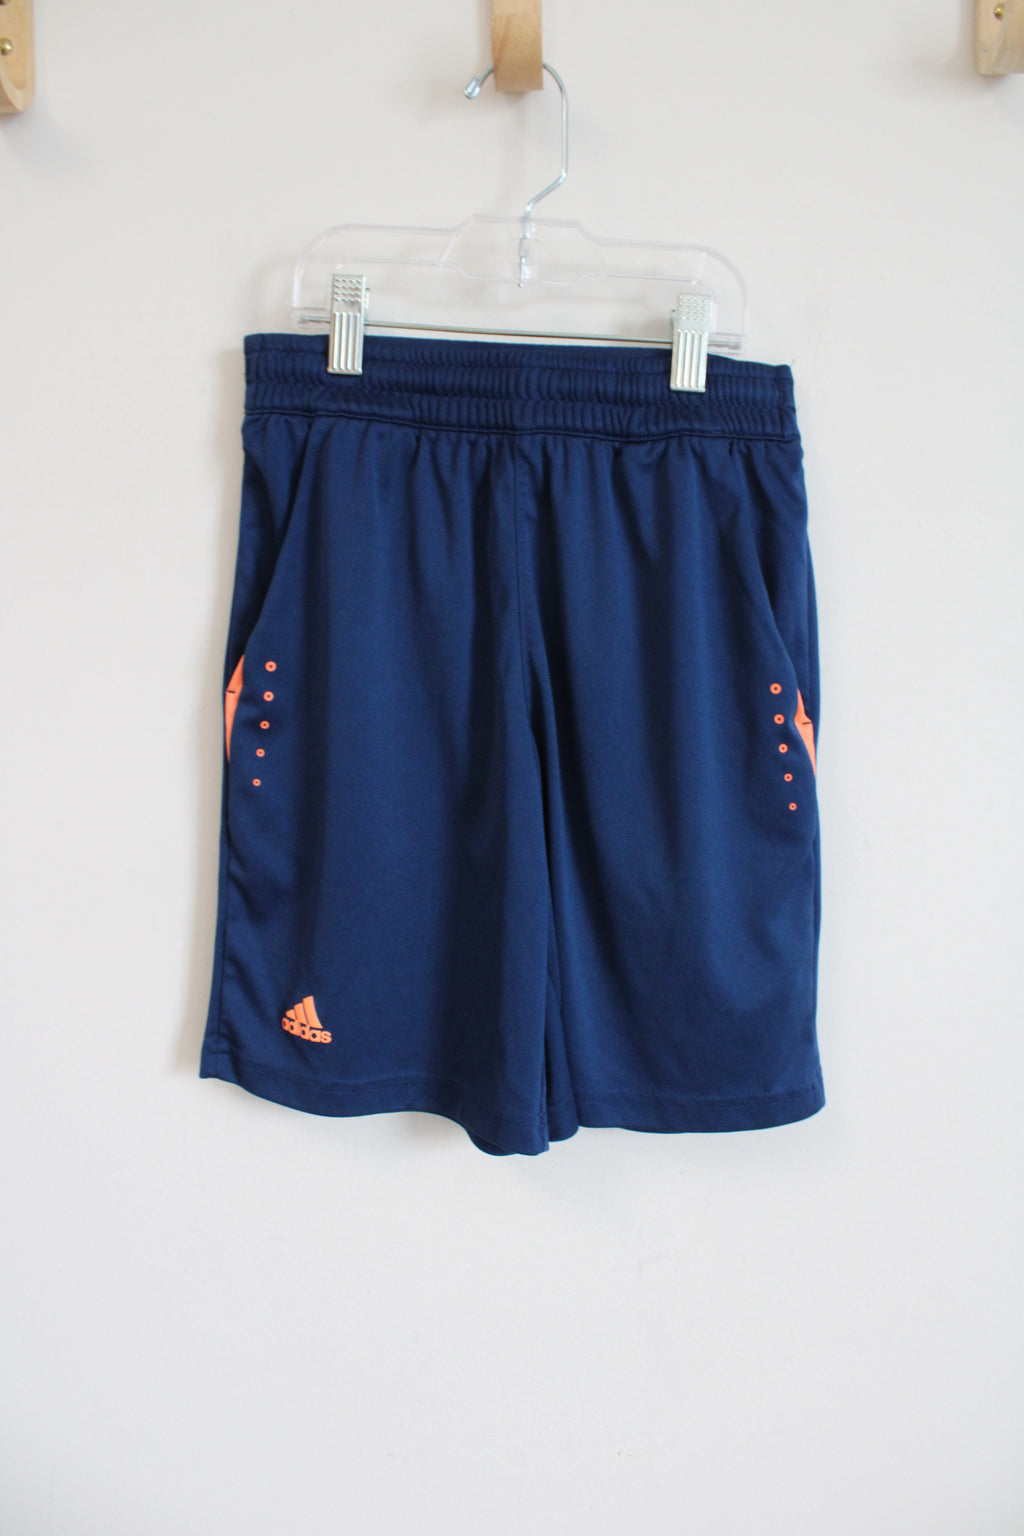 Adidas Dark Blue Orange Shorts | Youth M (10/12)